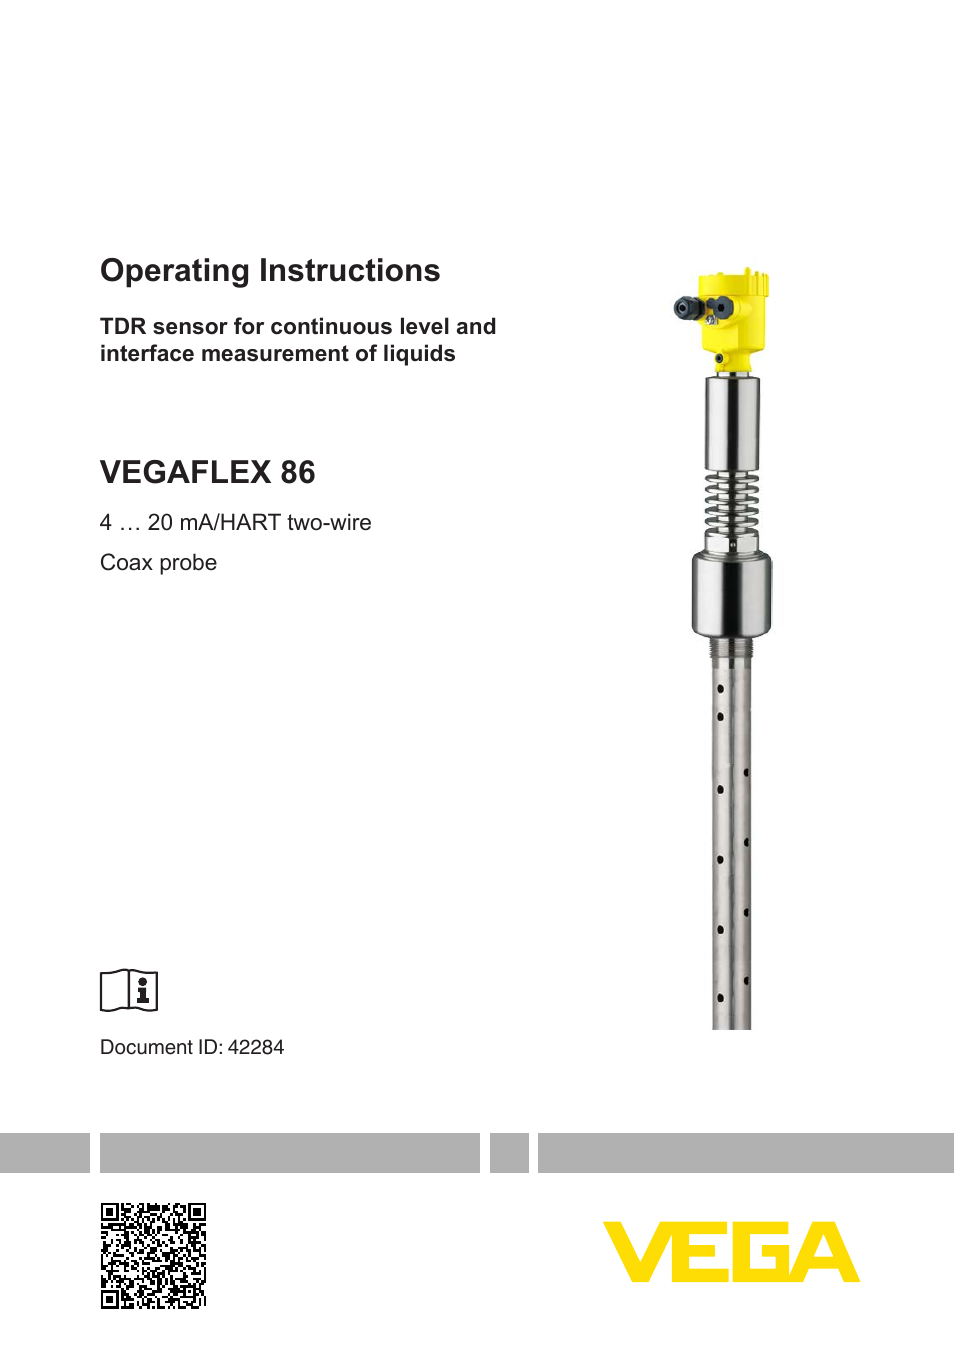 VEGAFLEX 86 4 … 20 mA_HART two-wire Coax probe